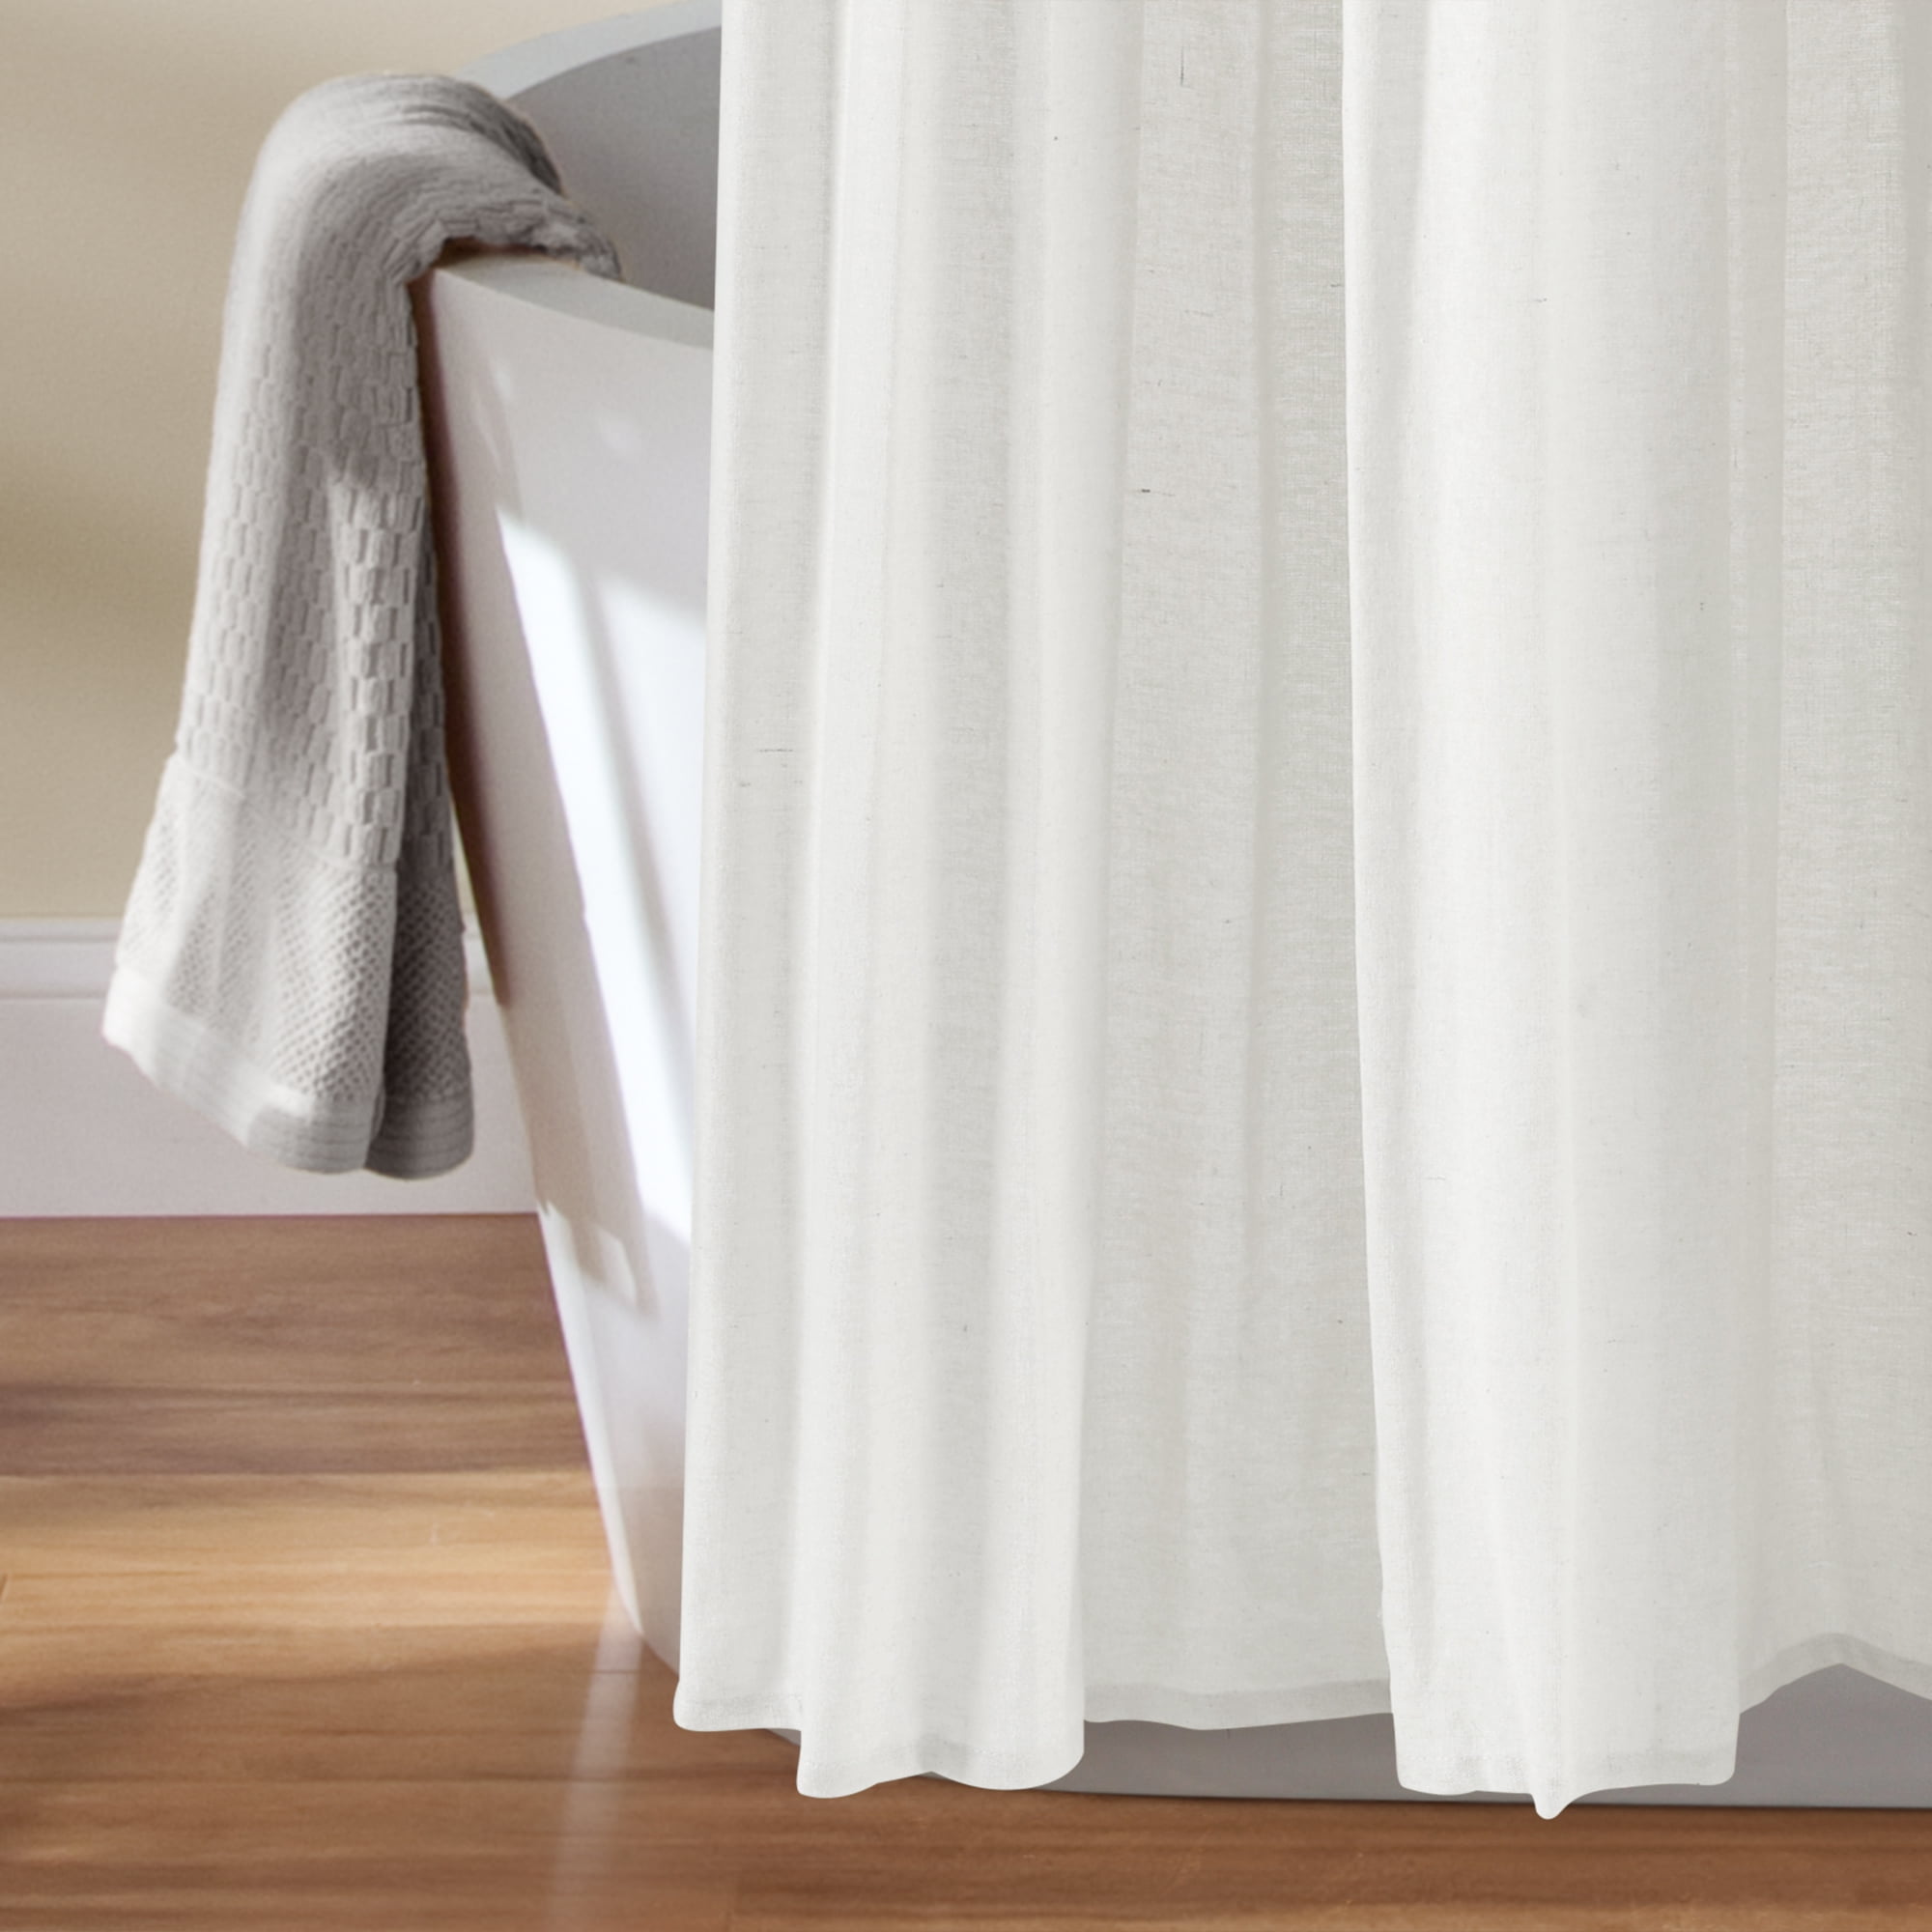 Louis Vuitton brown pattern shower curtains • Shirtnation - Shop